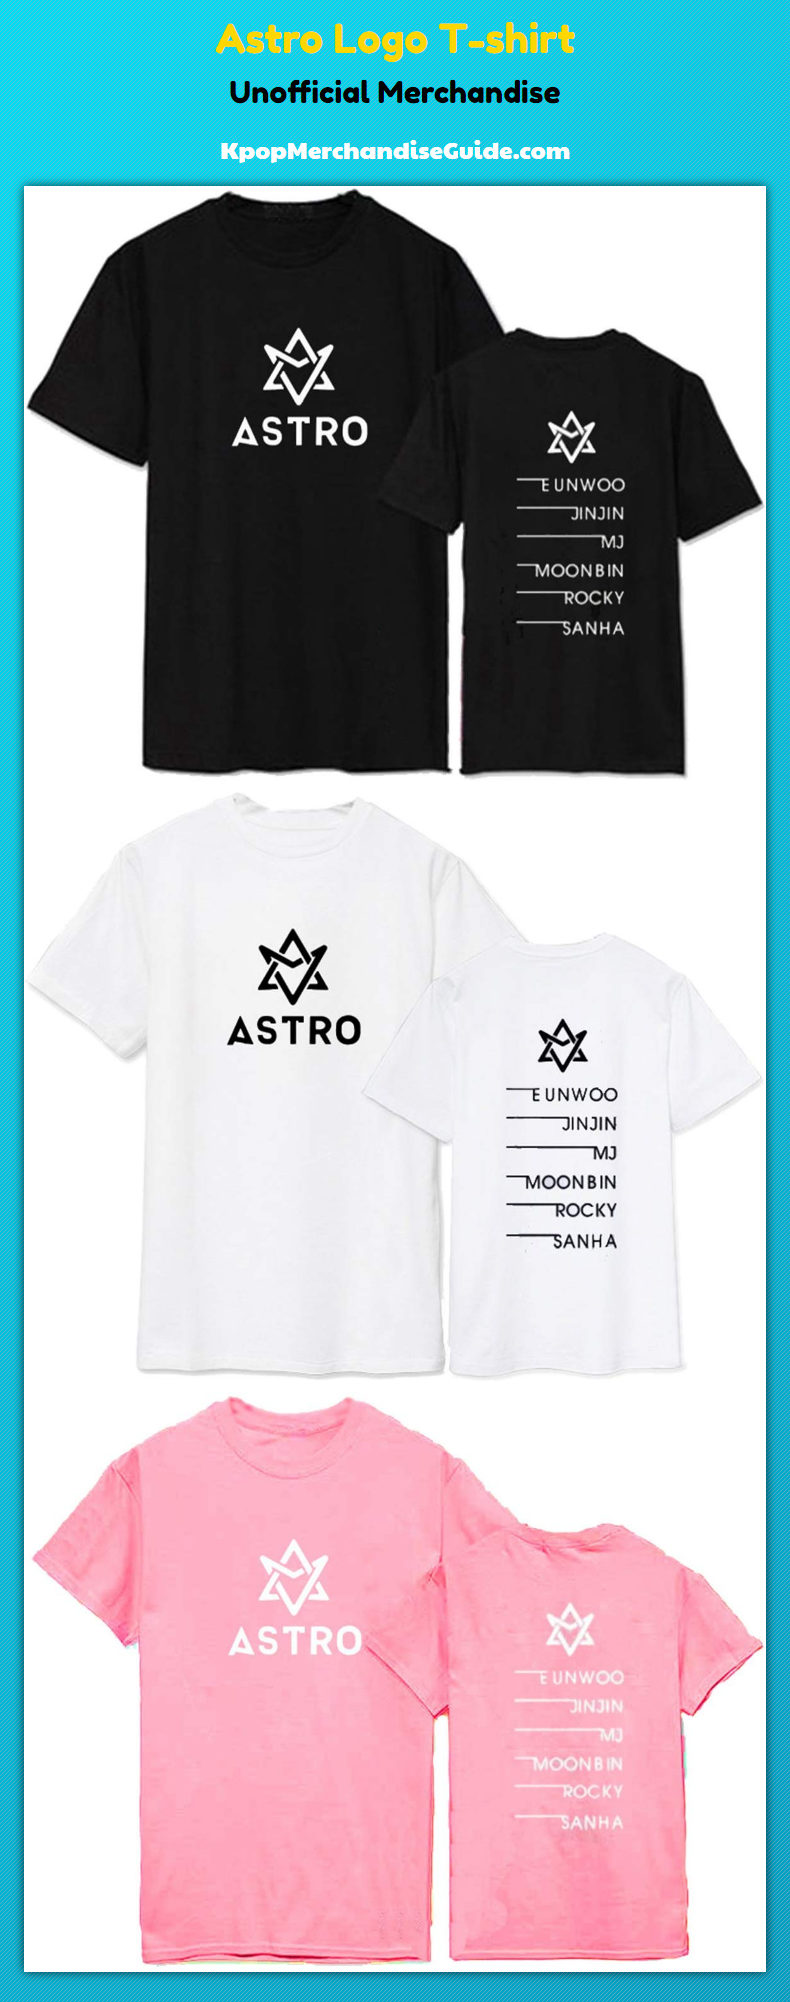 Astro Logo T-shirt